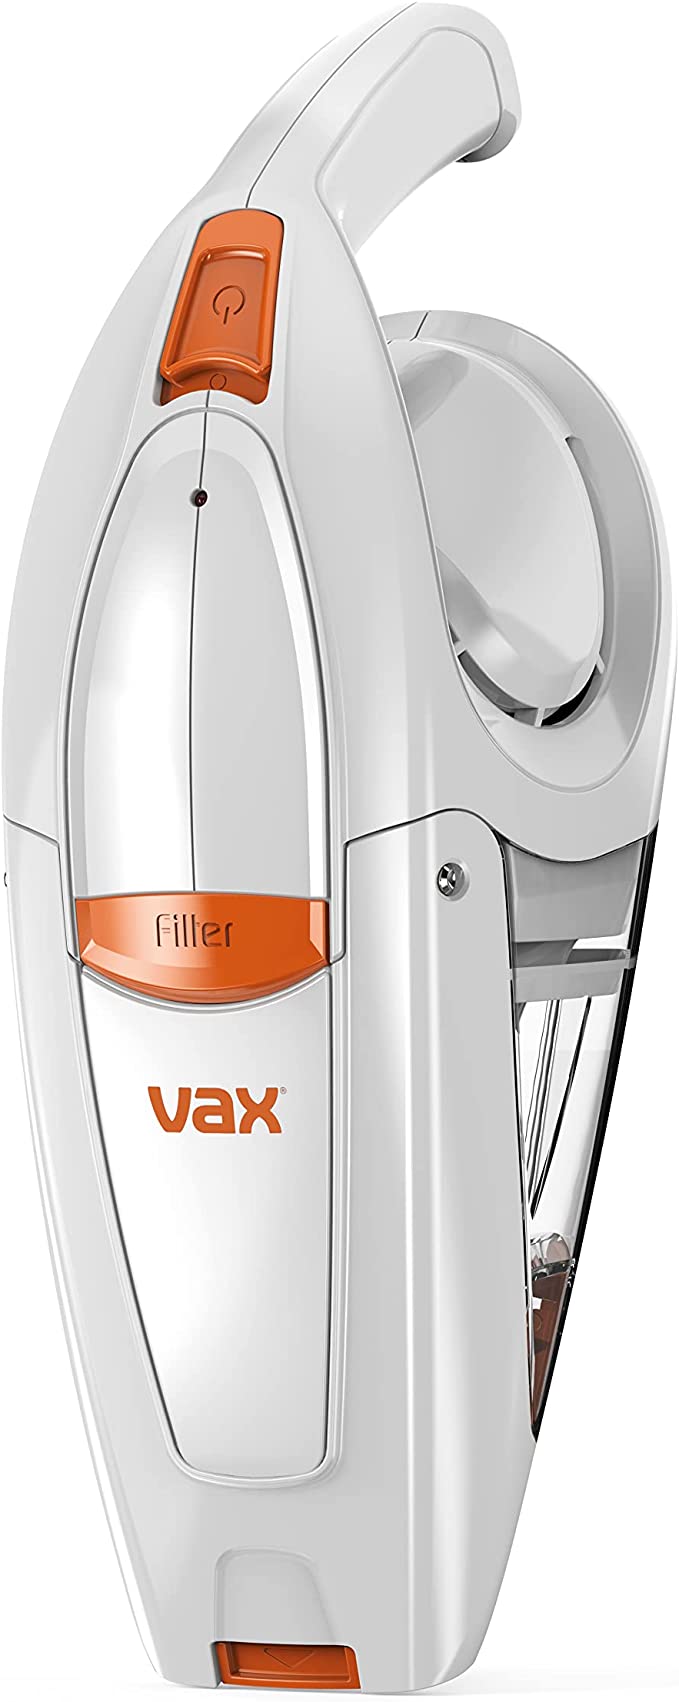 Vax Gator Rechargeable Handheld Vac